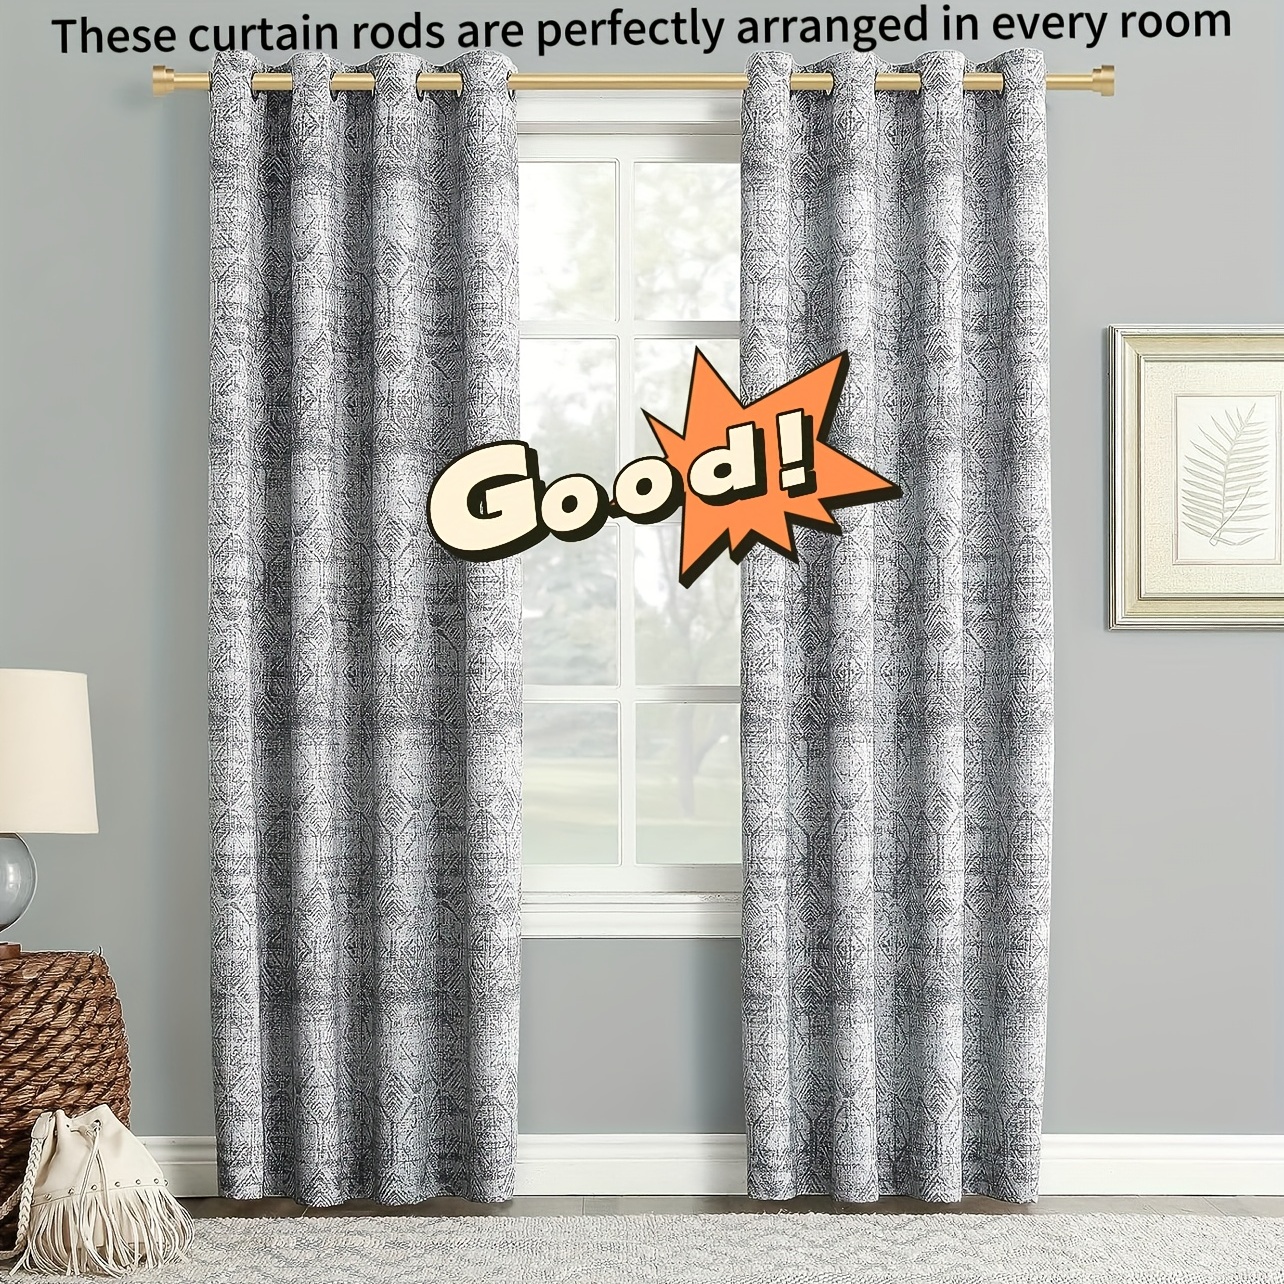 Barras de cortina para ventanas, barra de cortinas ajustable de 1